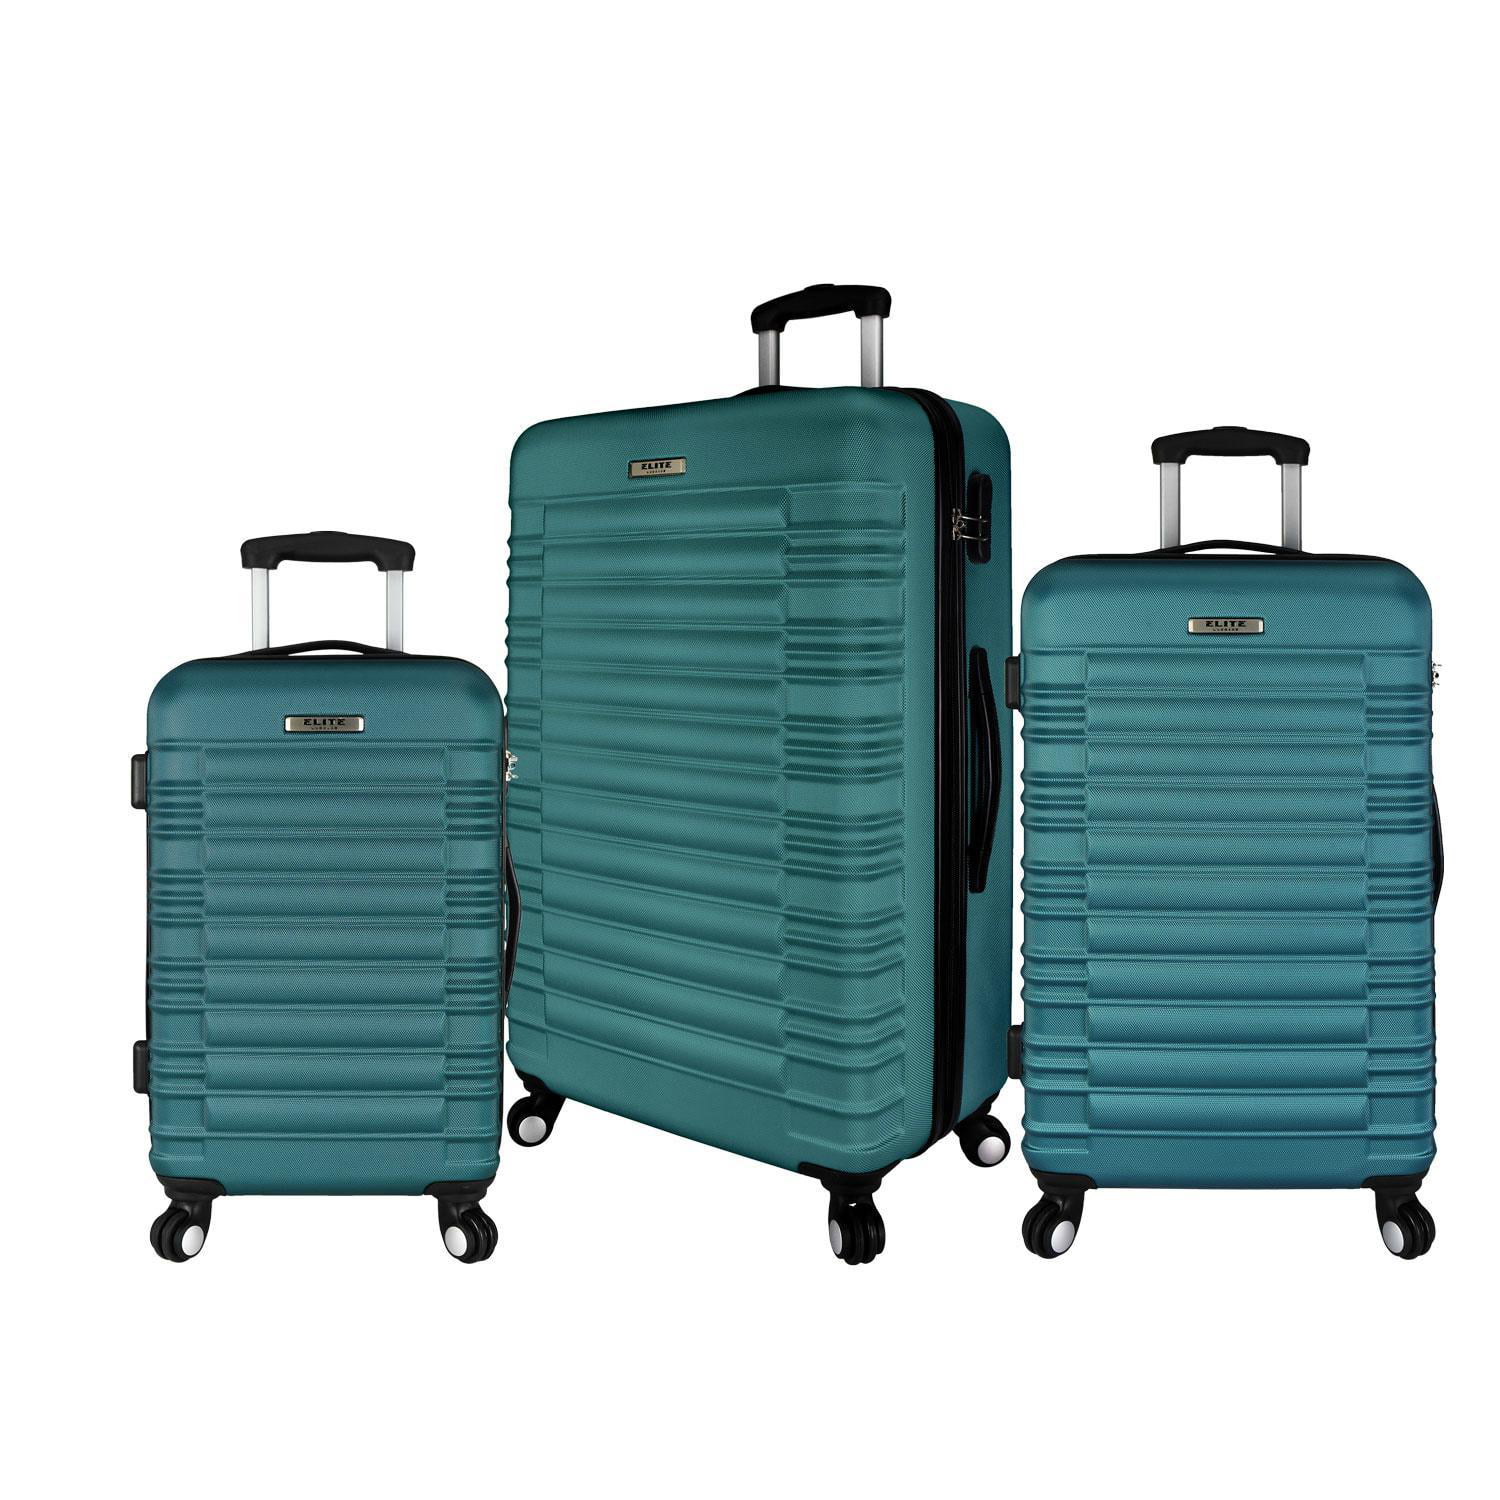 Elite Luggage - Elite Luggage: Tustin 3-Piece Hardside Spinner Luggage Set, Teal - 0